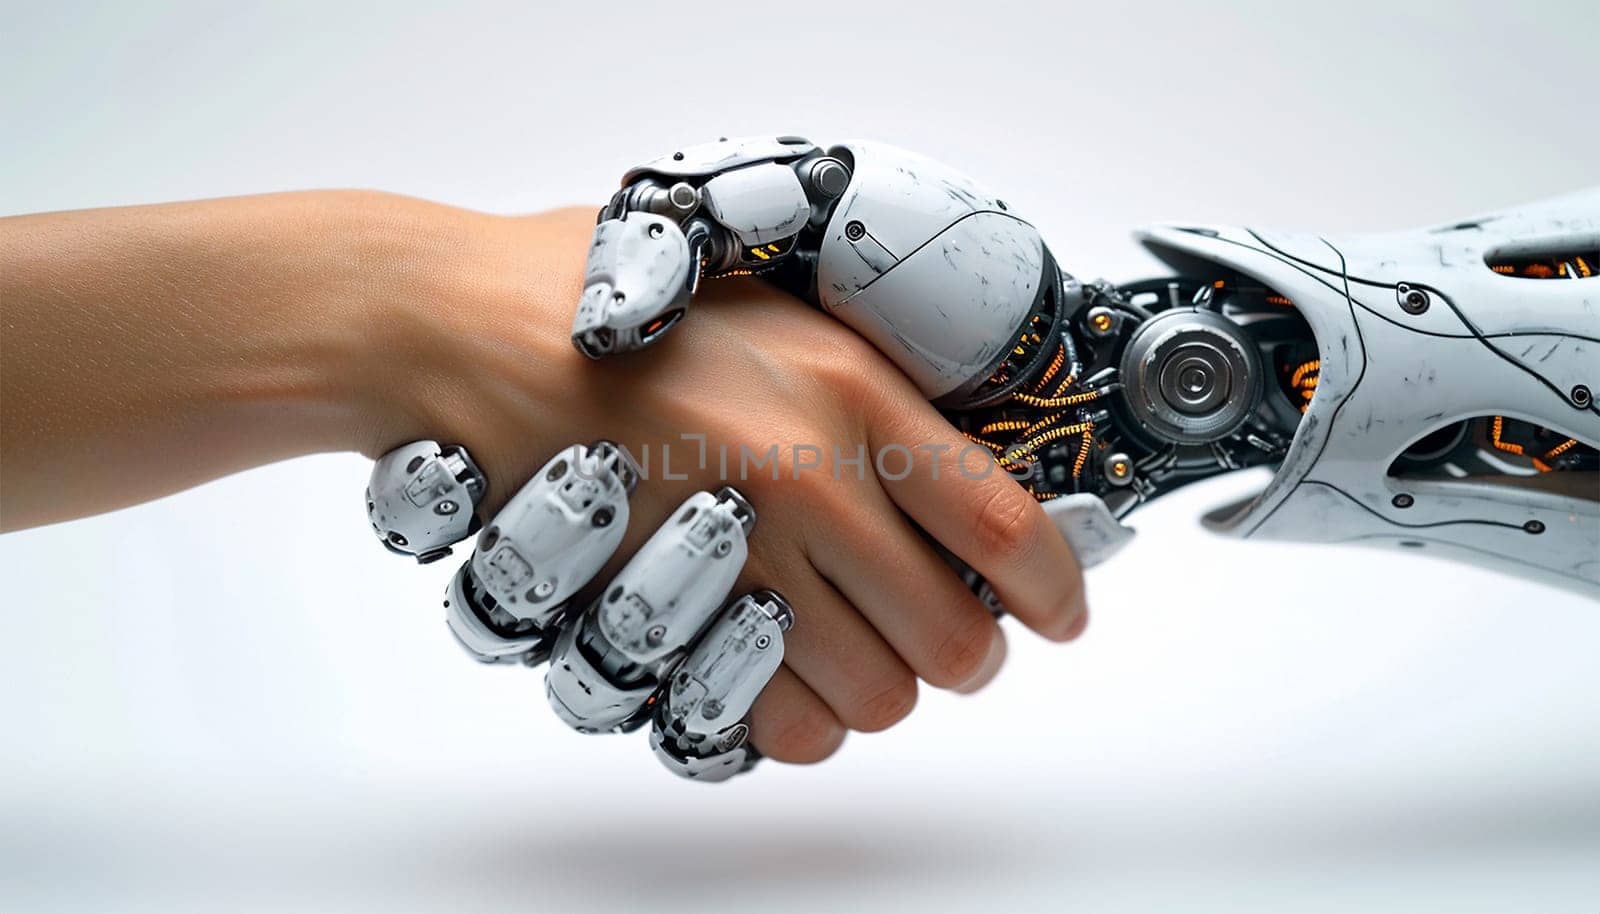 Robot shaking human hand. Cyber communication design concept. Female robot and human holding hands with handshake. Digital robot handshake futuristic digital age robot science digital technology white background close up